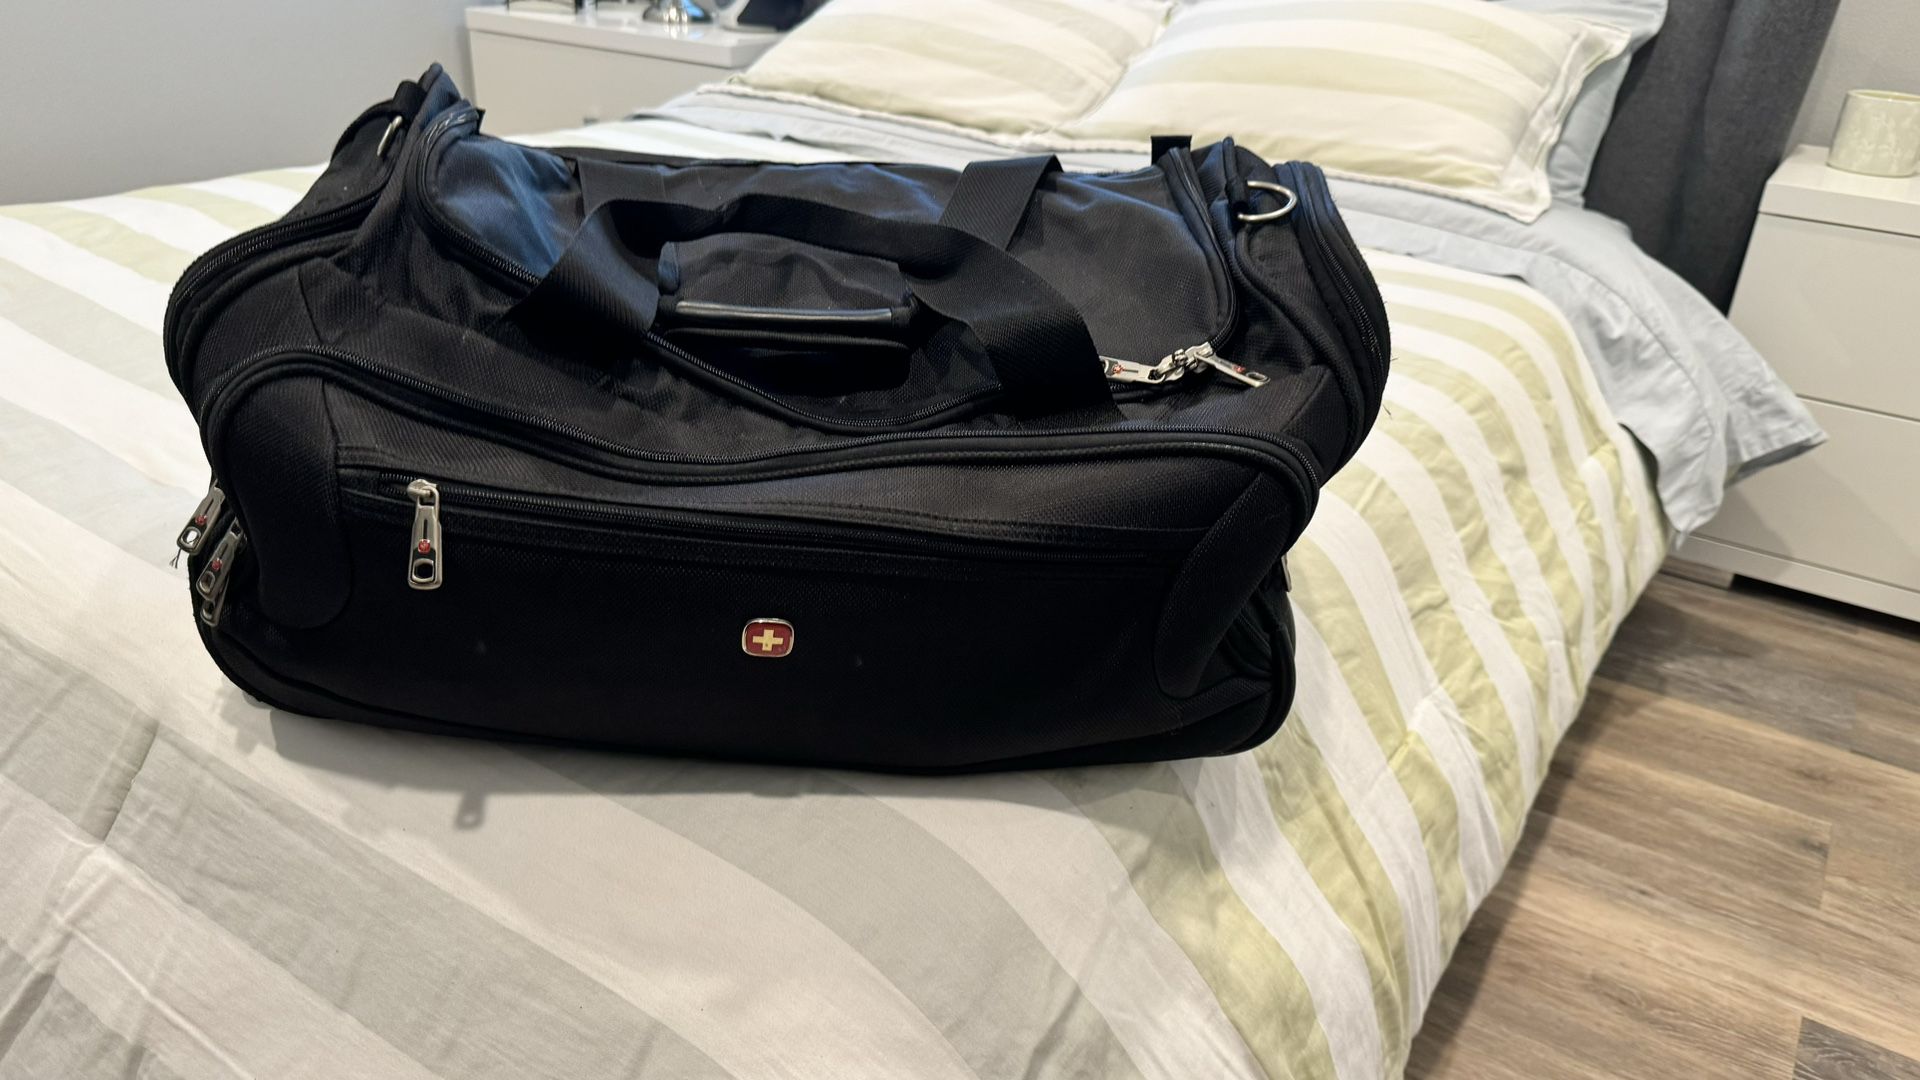 Swiss gear Duffle Bag With Handlebars And Wheels